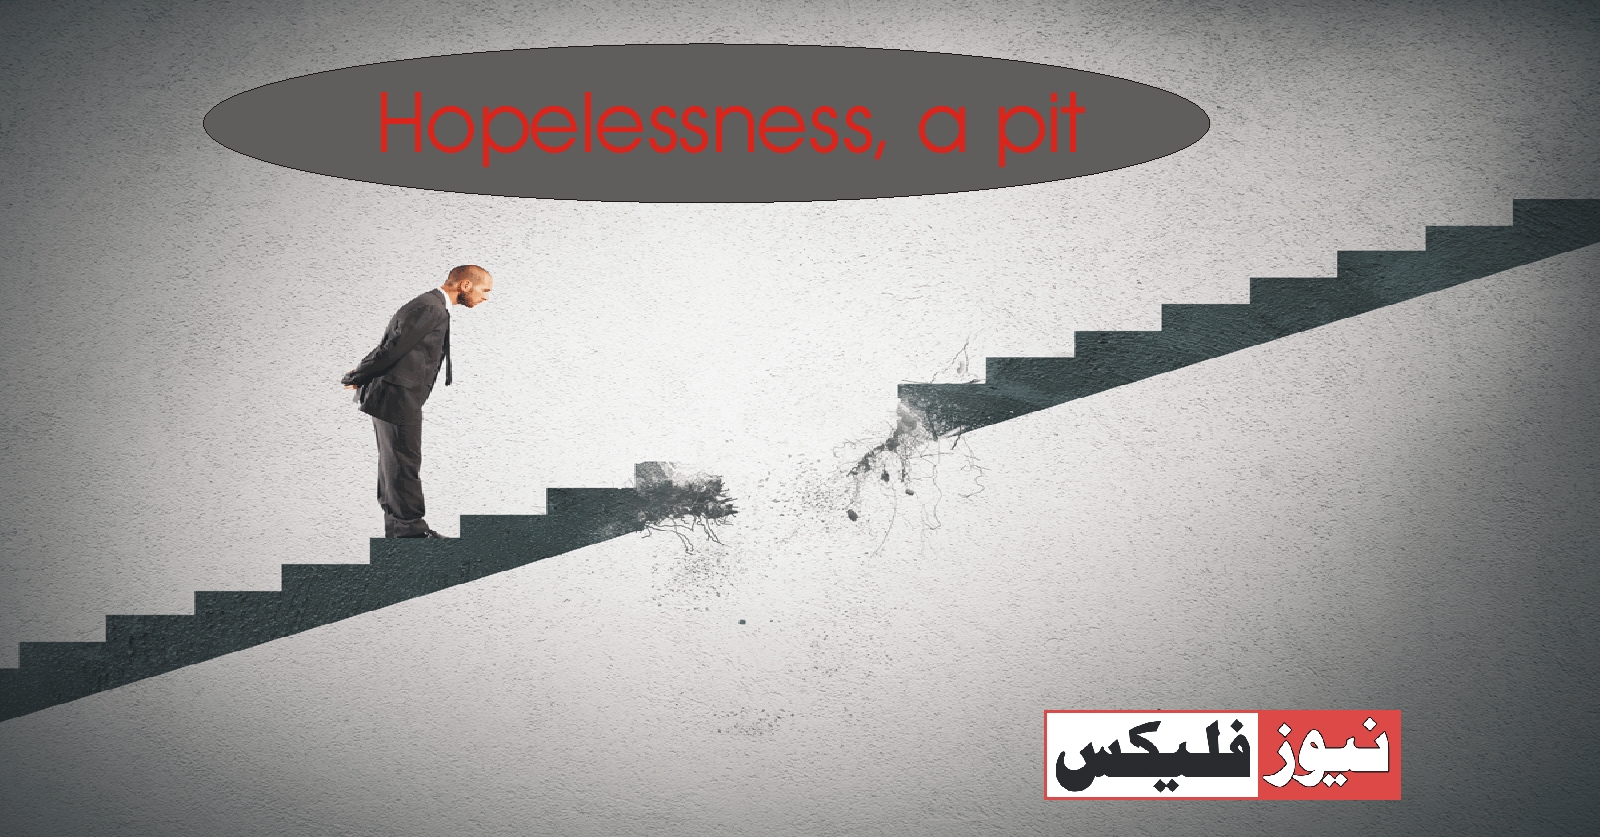 Hopelessness, a pit